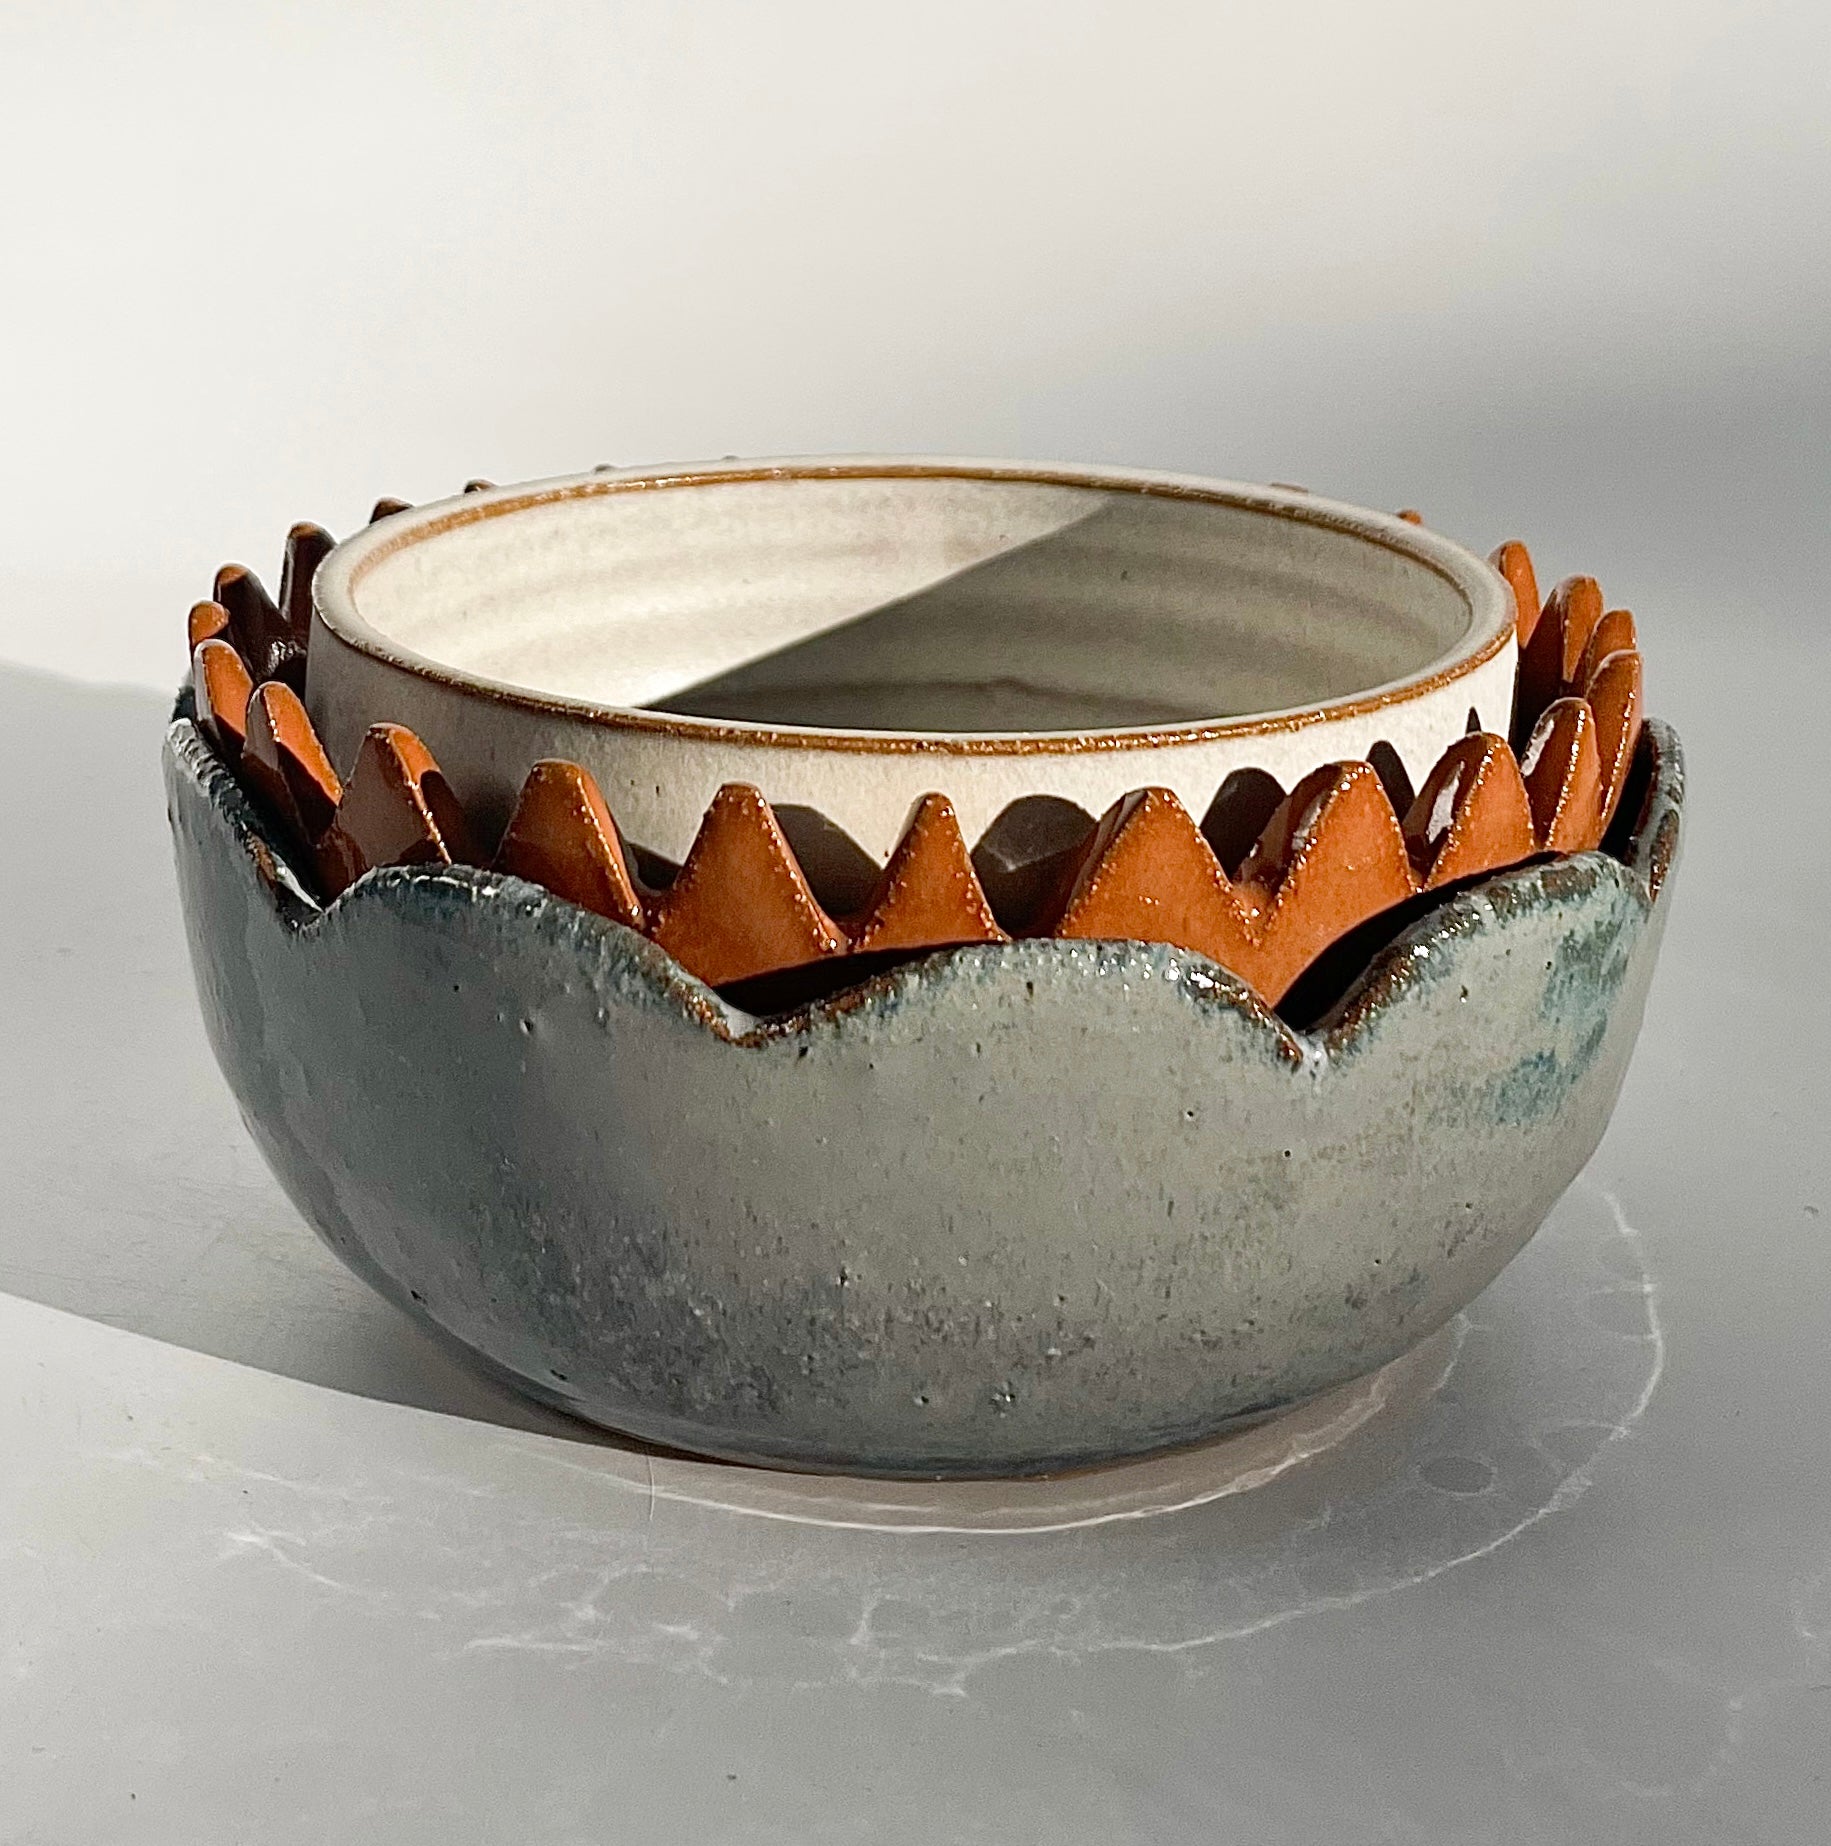 burnt siena bowl with sun ray edges - Hey Moon ceramics